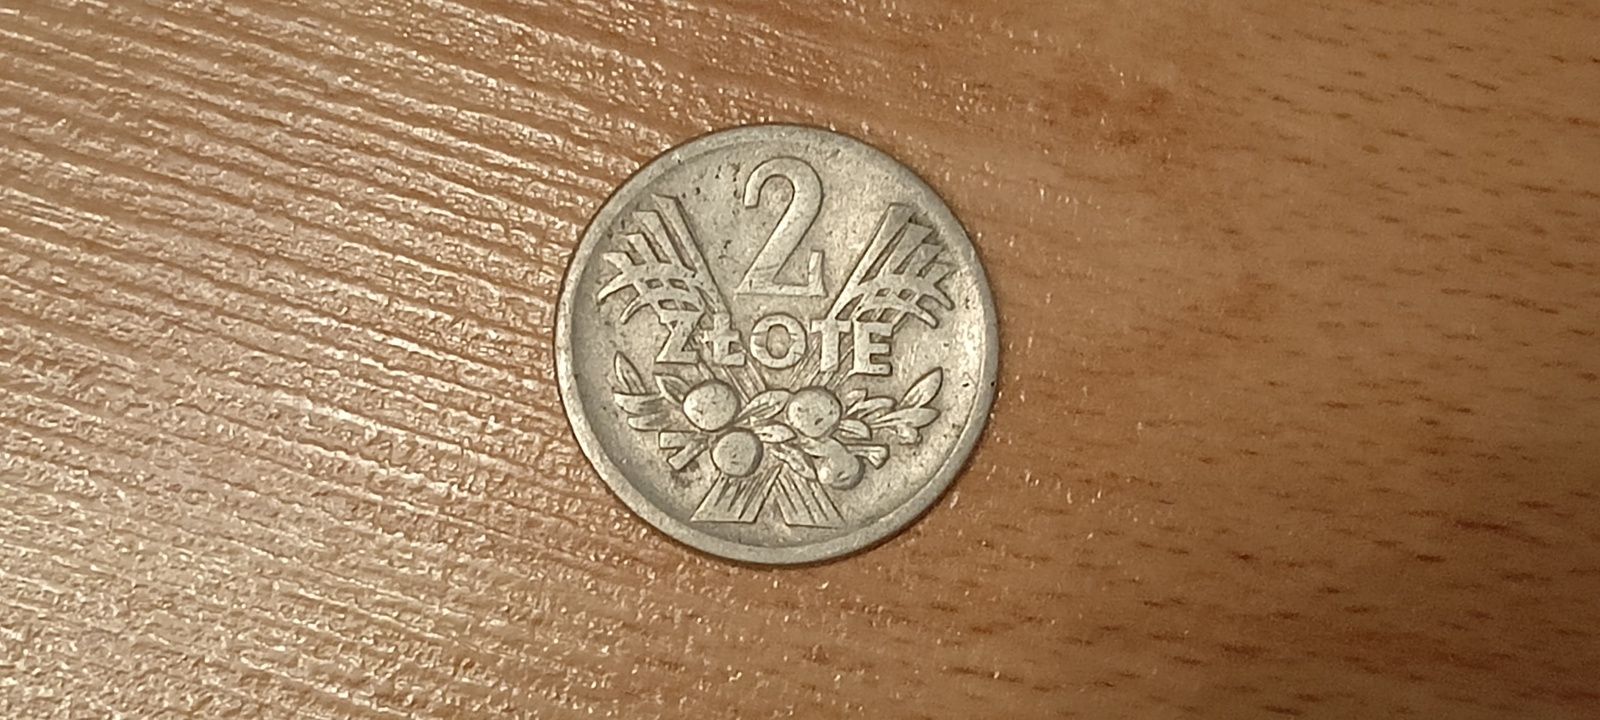 Moneta 2zł z 1958r prl